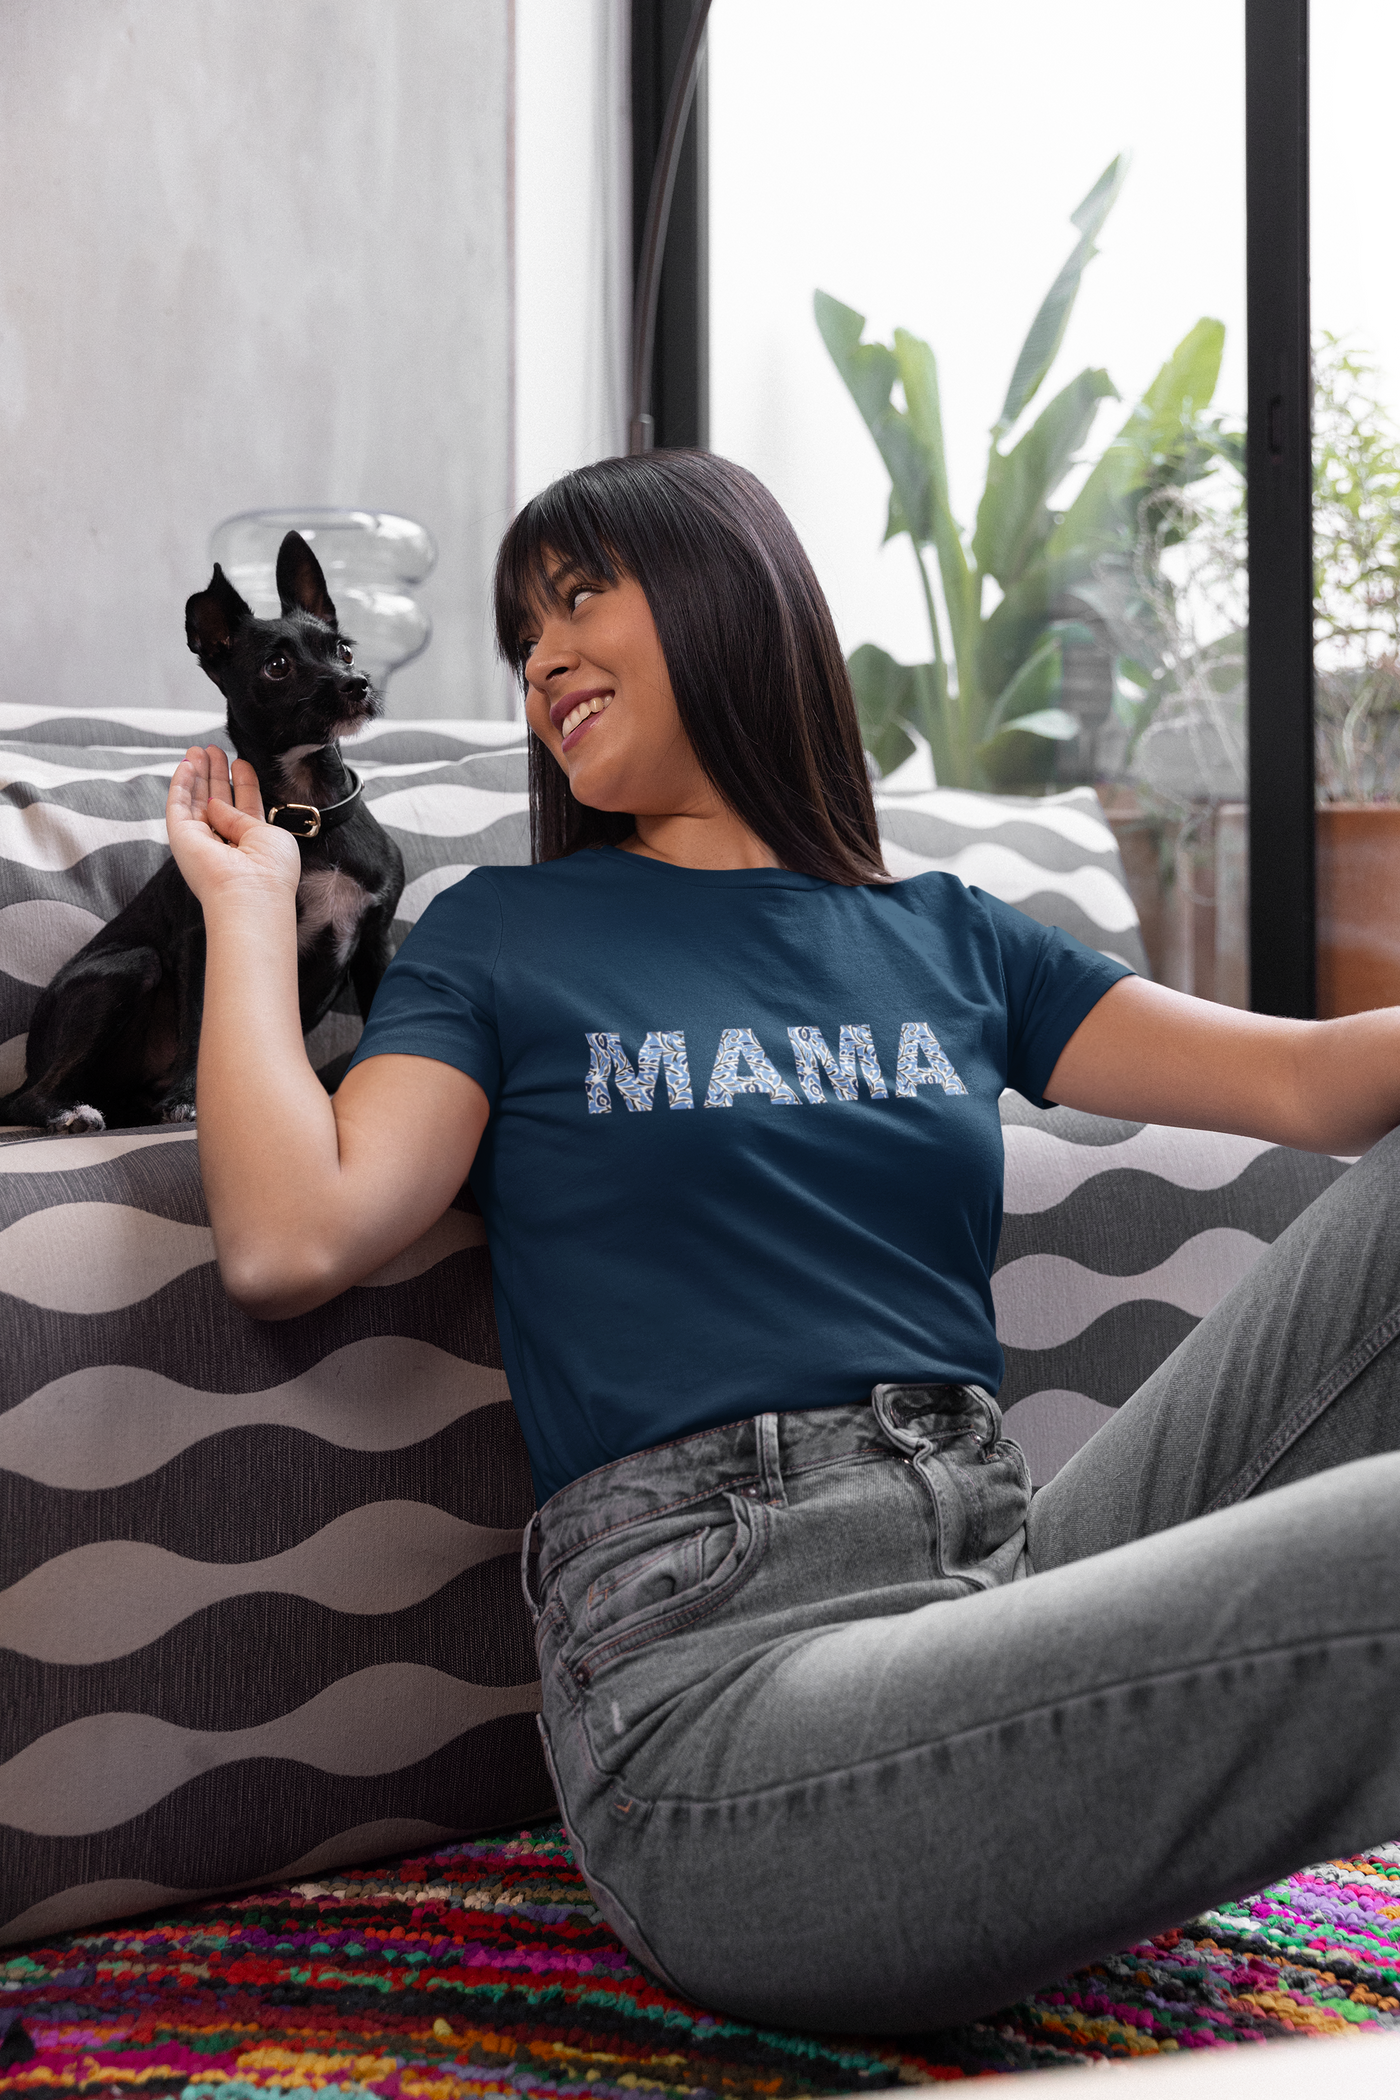 Natalia Mama T-Shirt